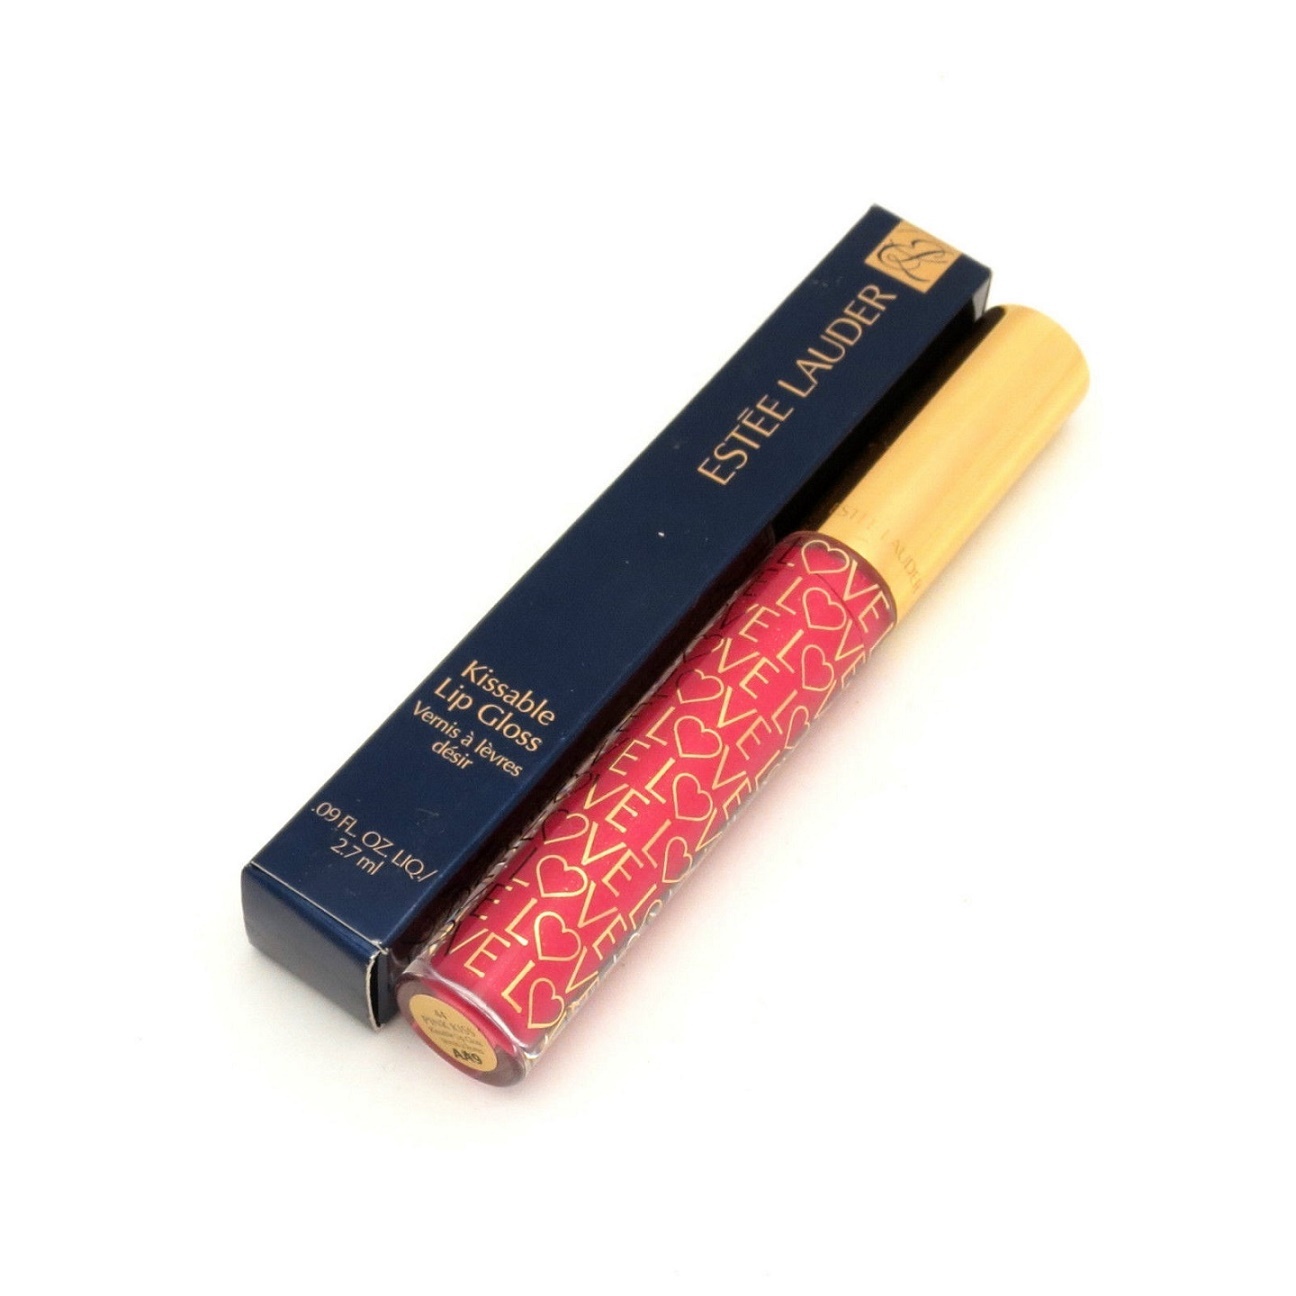 Estee Lauder Kissable Lip Gloss in Pink Kiss - NIB - Discontinued - $18.00